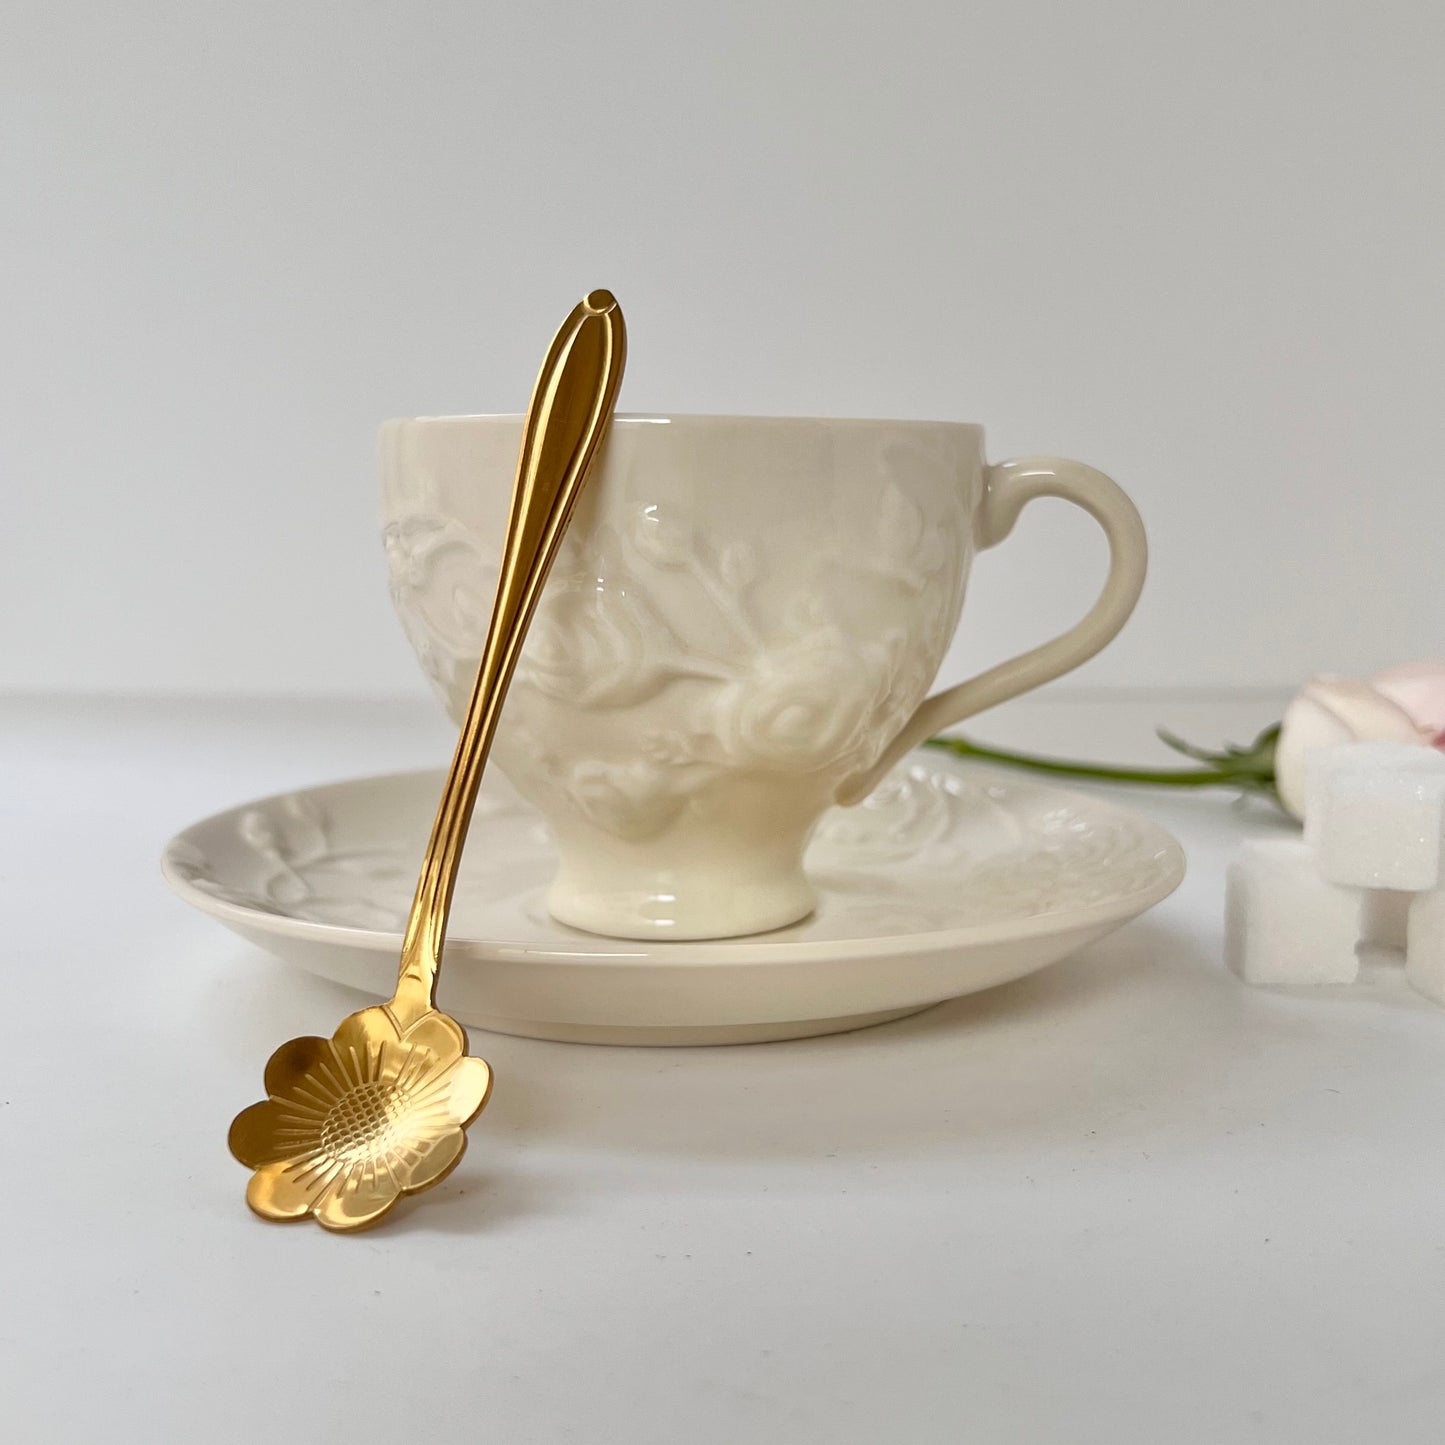 Dessert spoons - Gold Tea Spoons 4 pcs - Flower shape